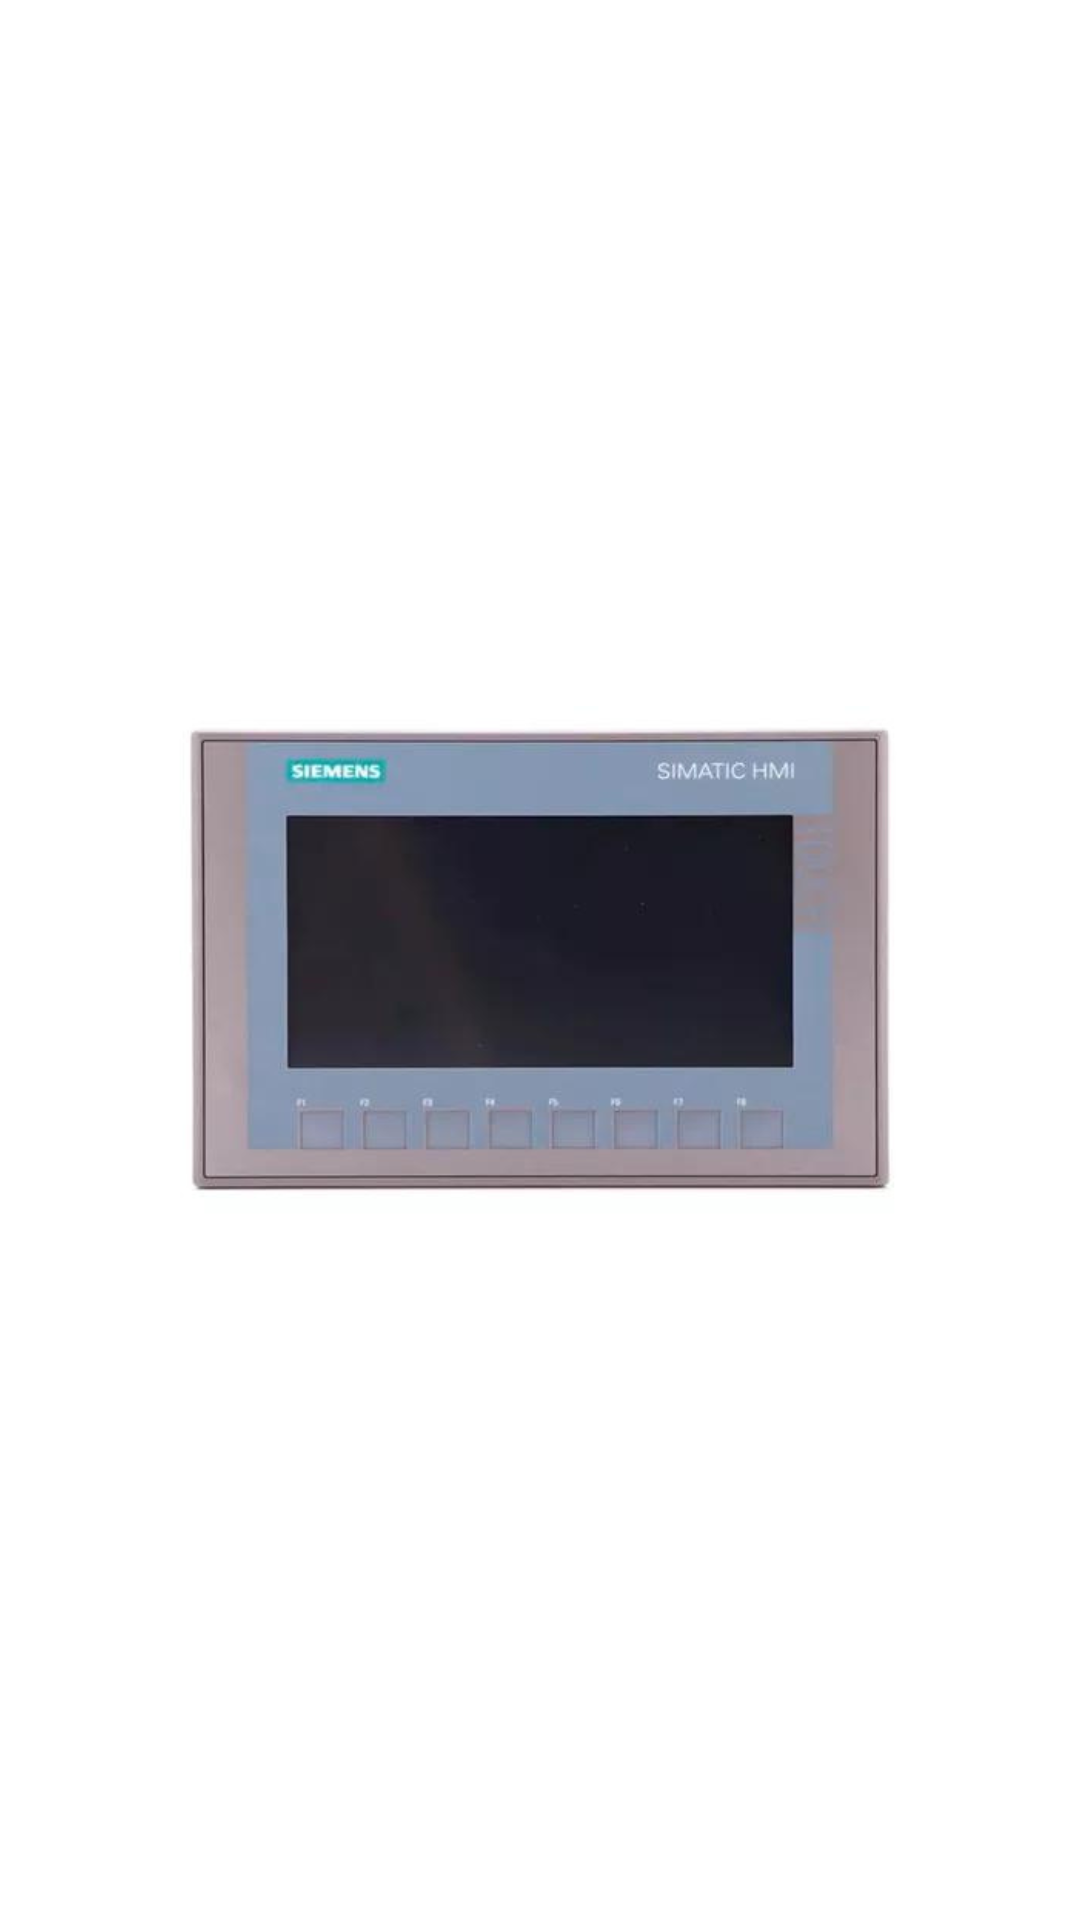 6AV2123-2GA03-0AX0 Siemens SIMATIC HMI, KTP700 Basic DP, panel básico, funcionamiento mediante tecla/táctil, pantalla TFT de 7", 65536 colores, interfaz PROFIBUS